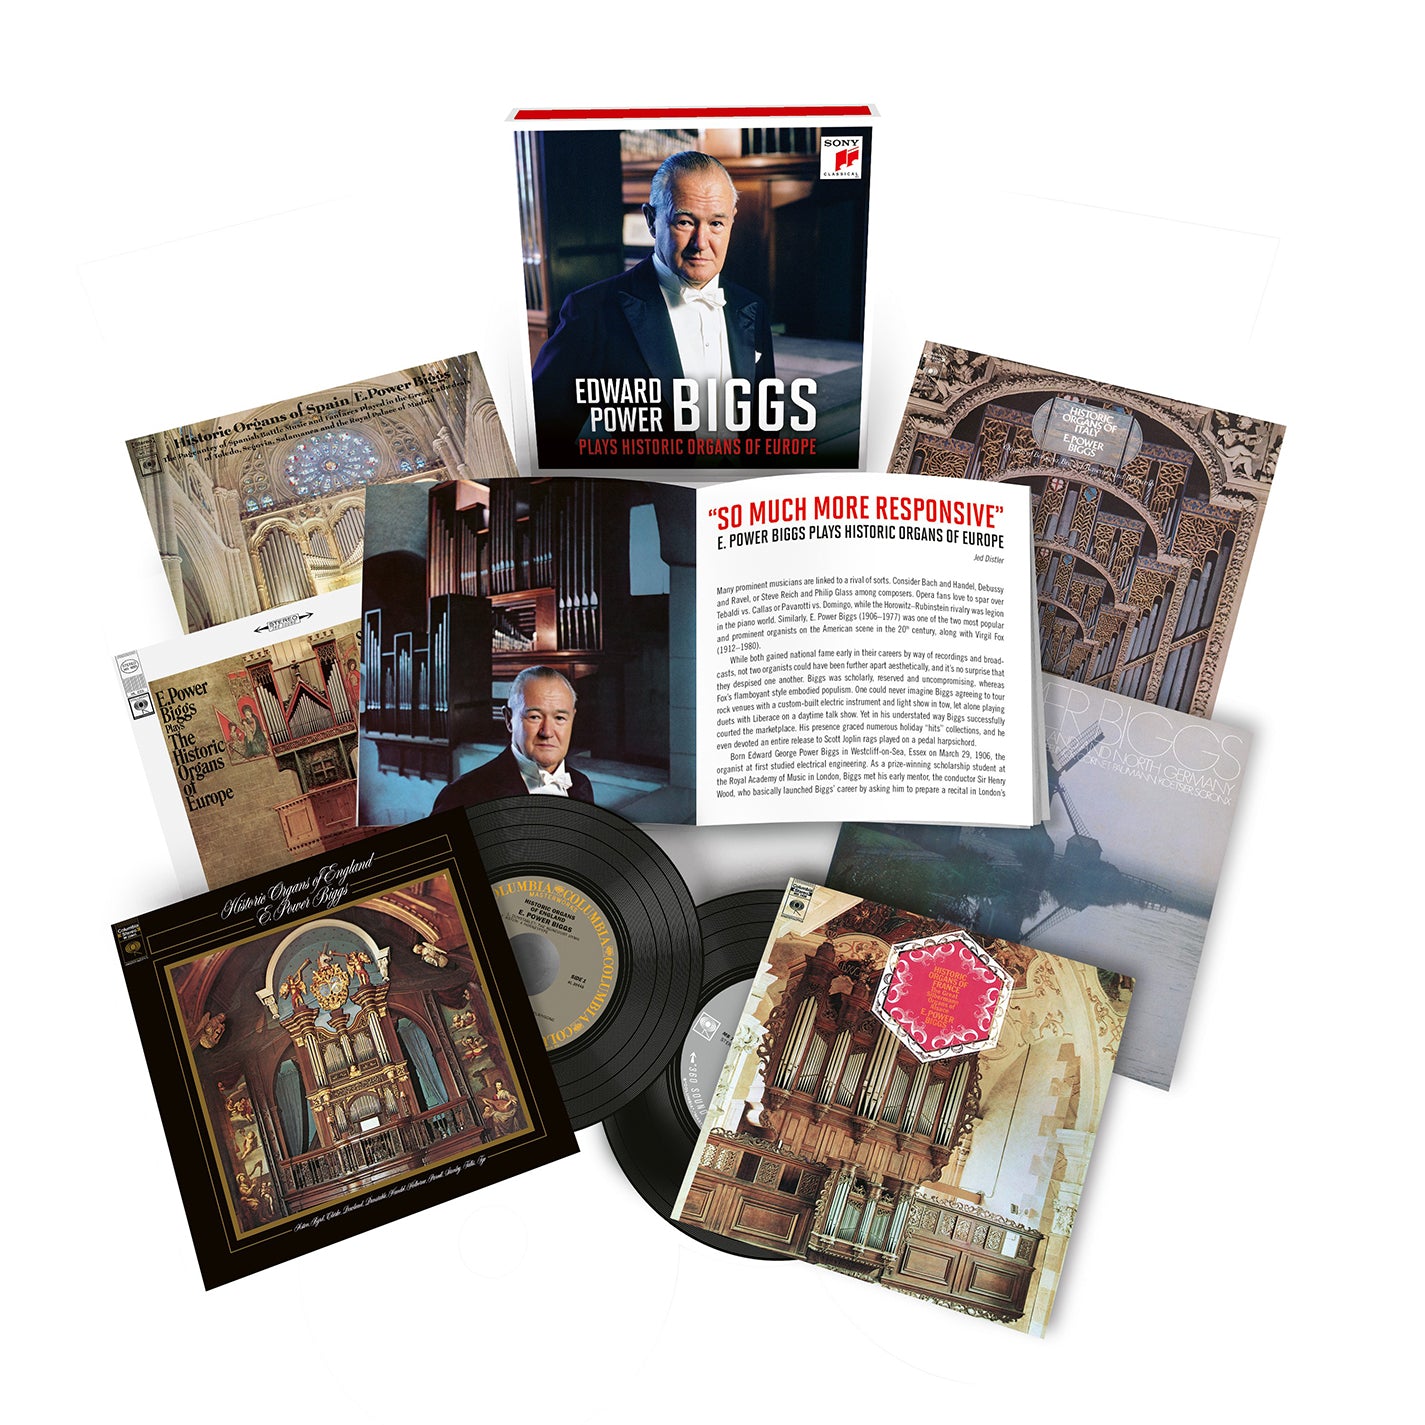 Edward Power Biggs Plays Historic Organs of Europe [6 CDs]